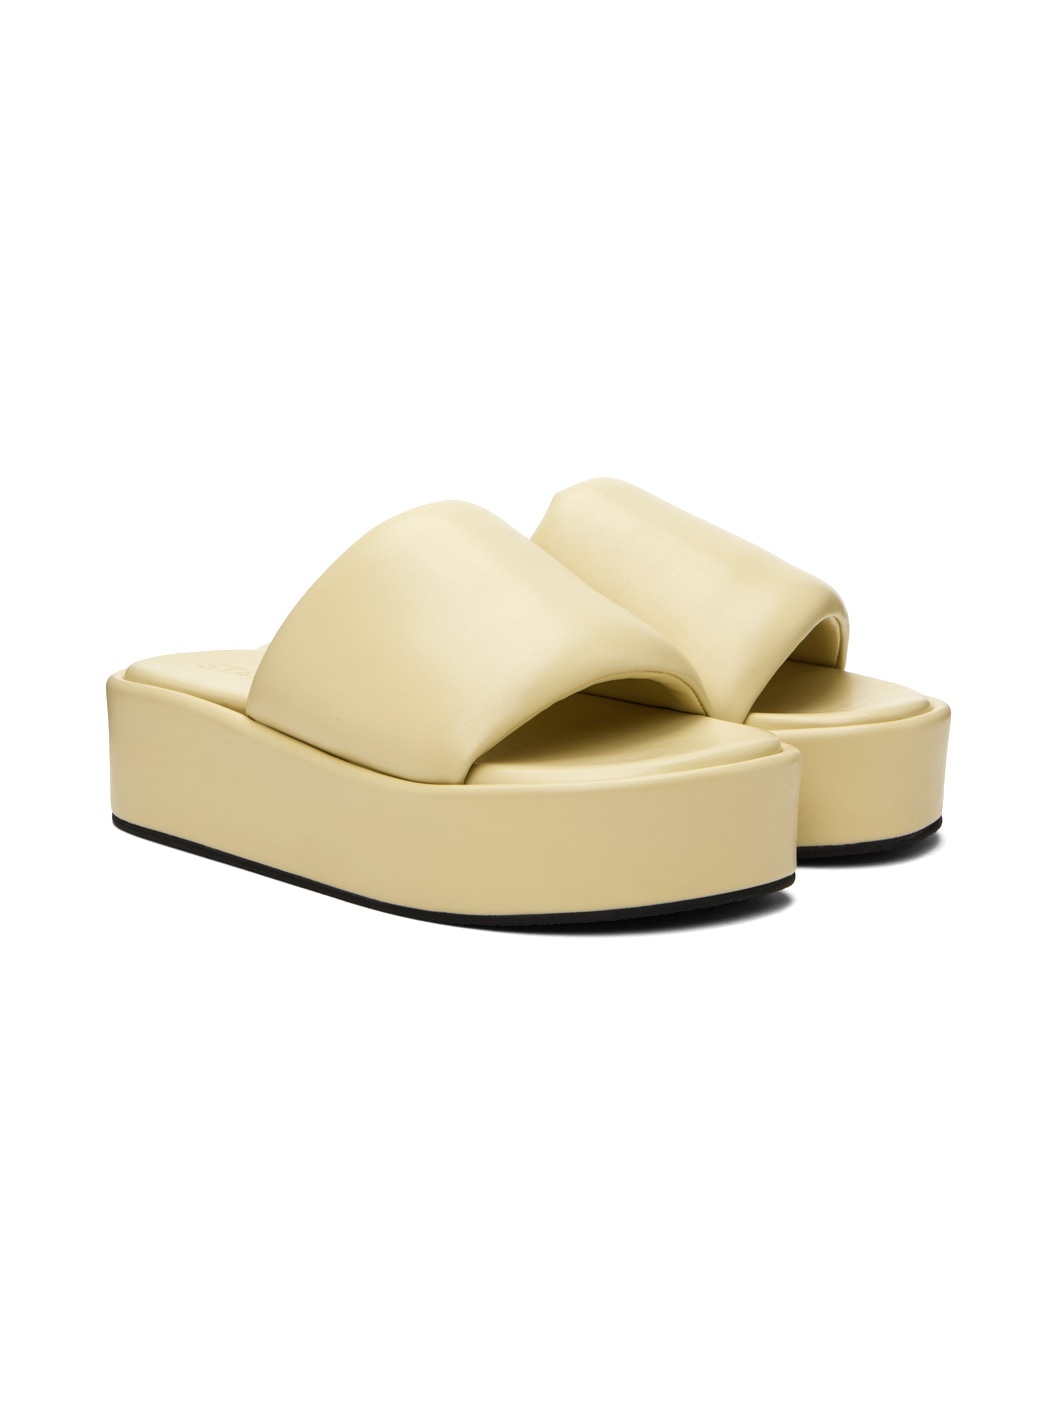 Green Phoebe Flatform Sandals - 4